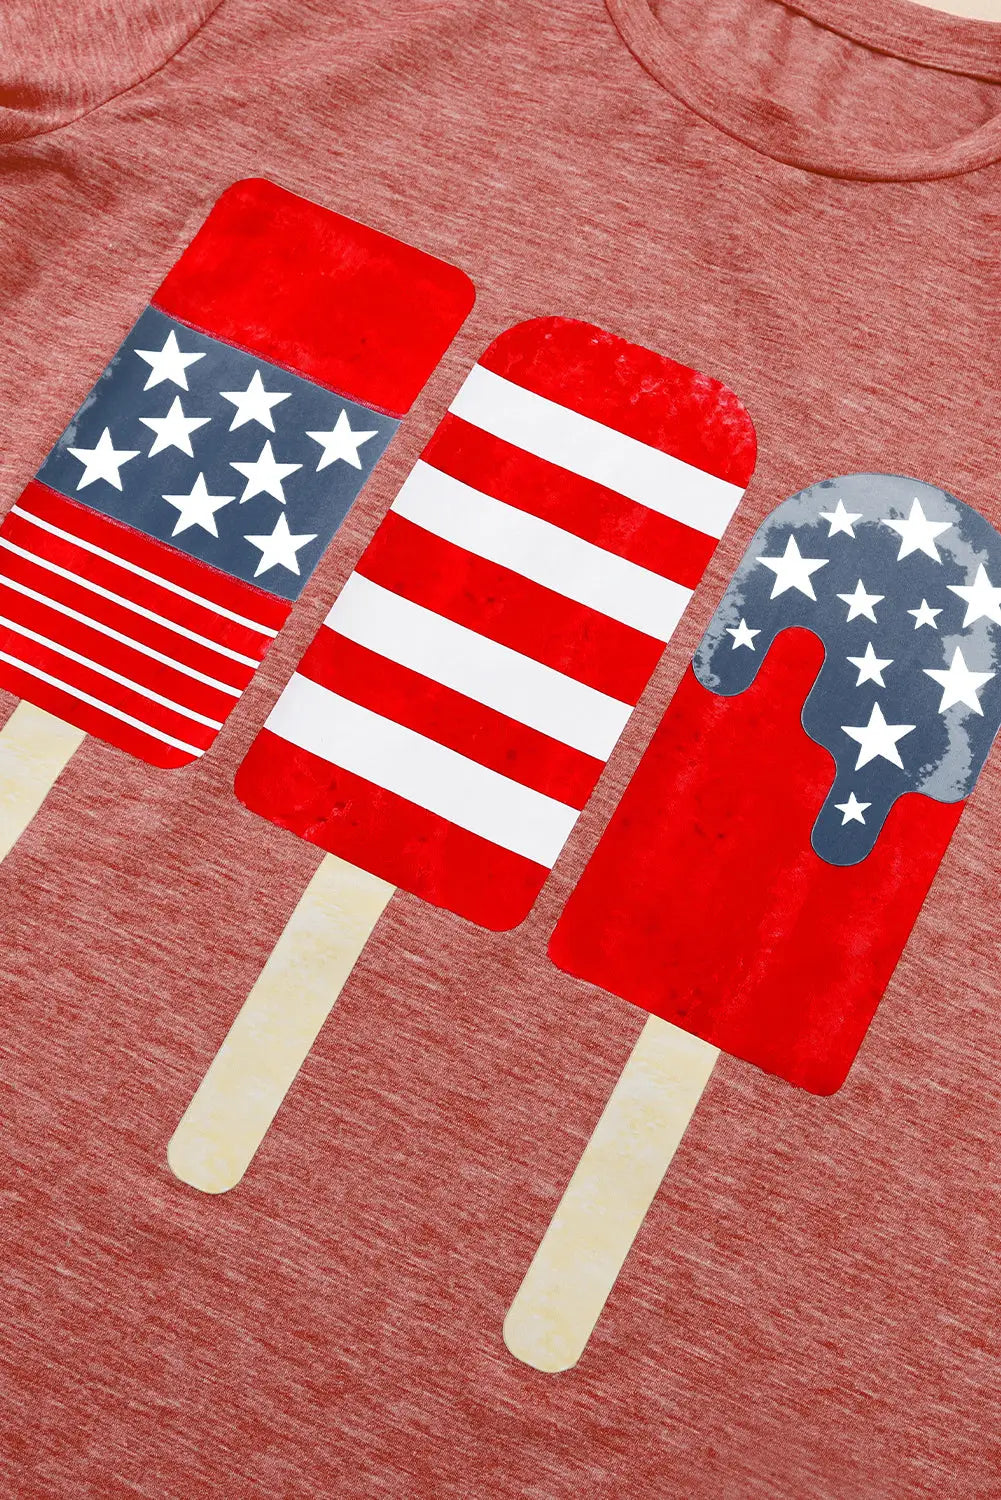 Patriotic popsicles short sleeve tee - graphic